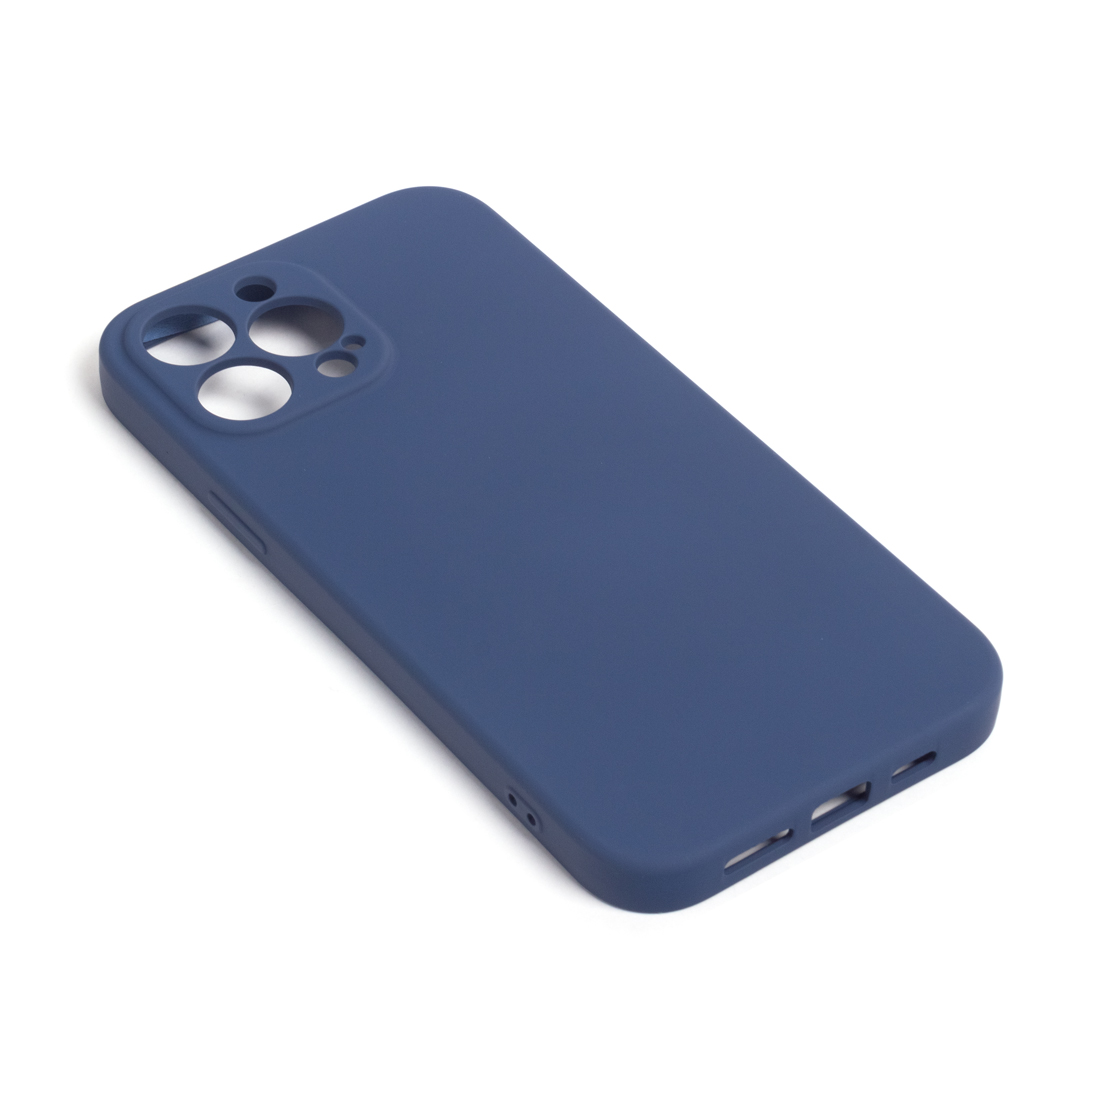 картинка Чехол для телефона X-Game XG-HS84 для Iphone 13 Pro Max Силиконовый Тёмно-синий от магазина itmag.kz